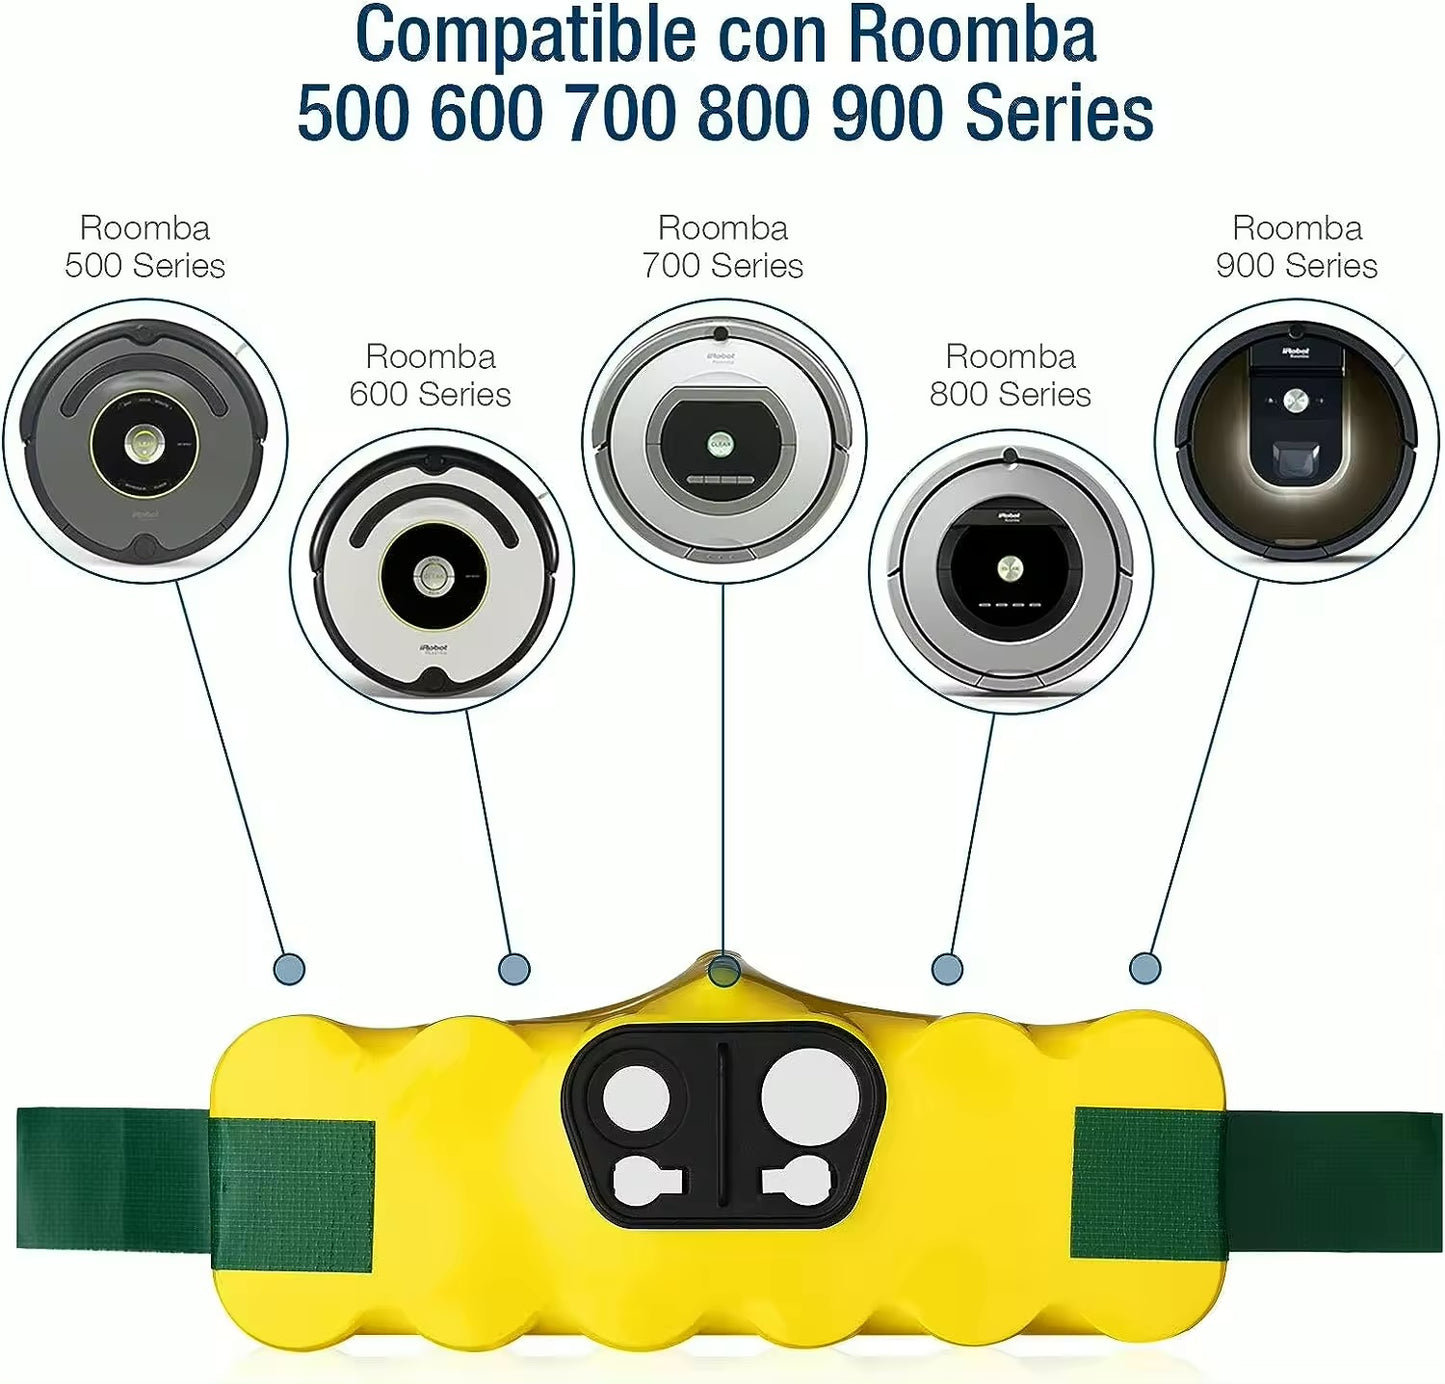 Premium Bateria 4500mAh: Compatible con Roomba Irobot series 500, 600, 700, 800 y 900